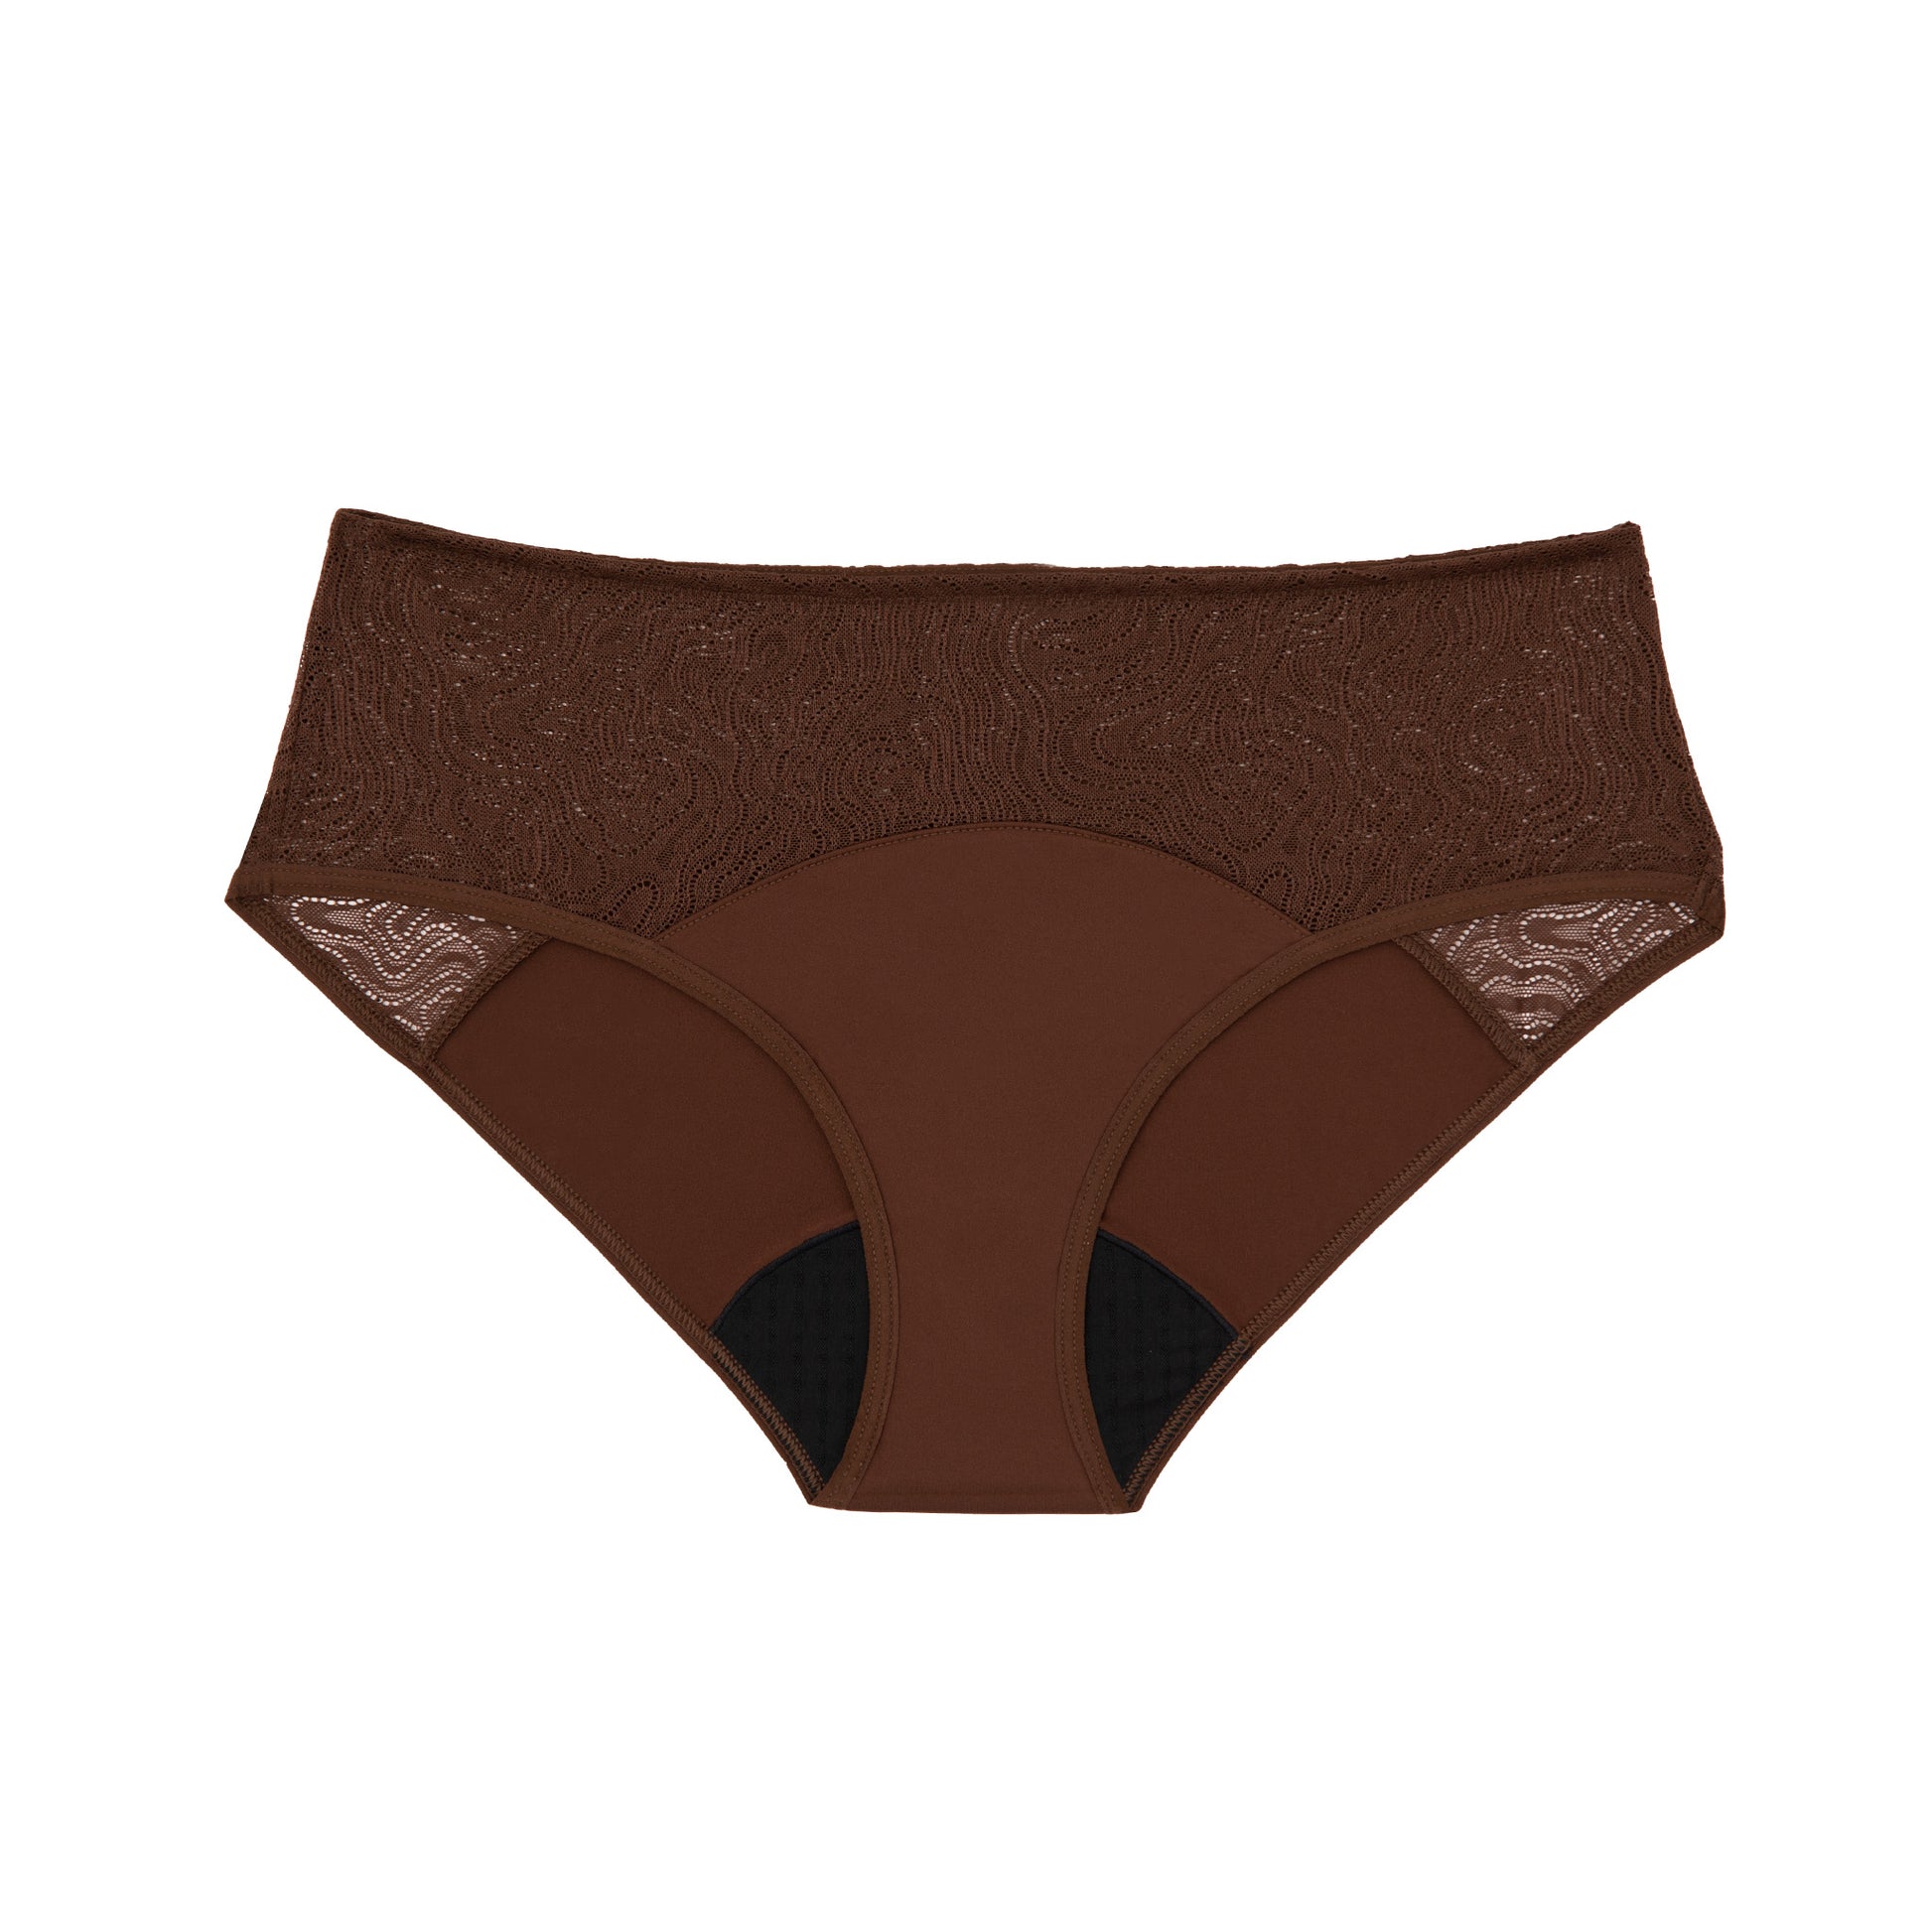 150 Pairs Women's Brown Cotton Panty, Size 12 - Womens Panties & Underwear  - at 